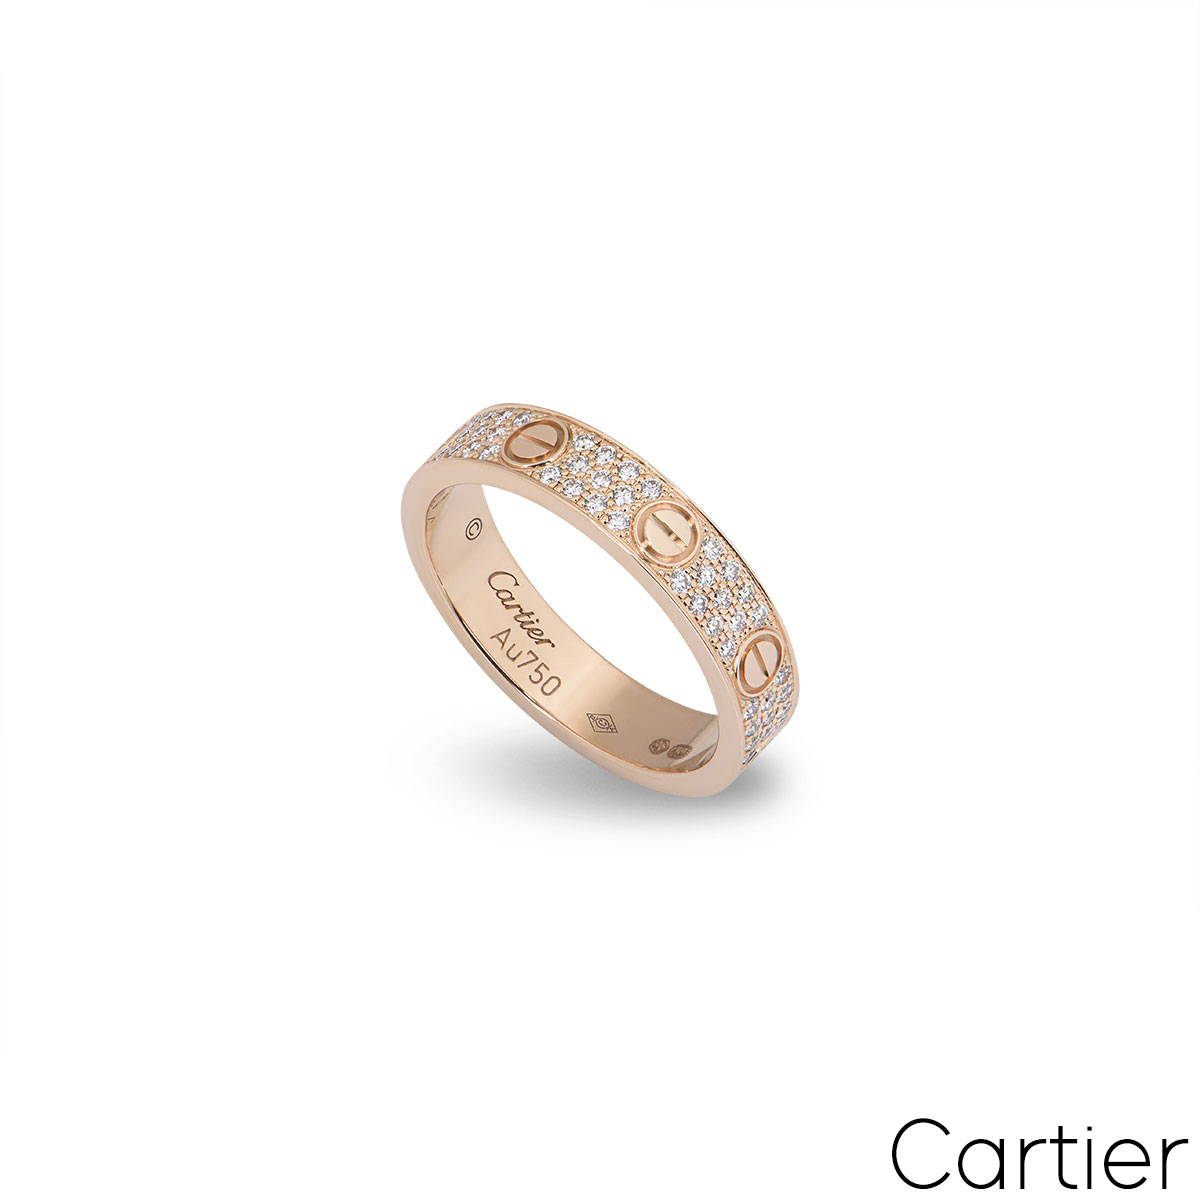 Cartier Rose Gold Pave Diamond Wedding Love Ring Size 52 B4085800